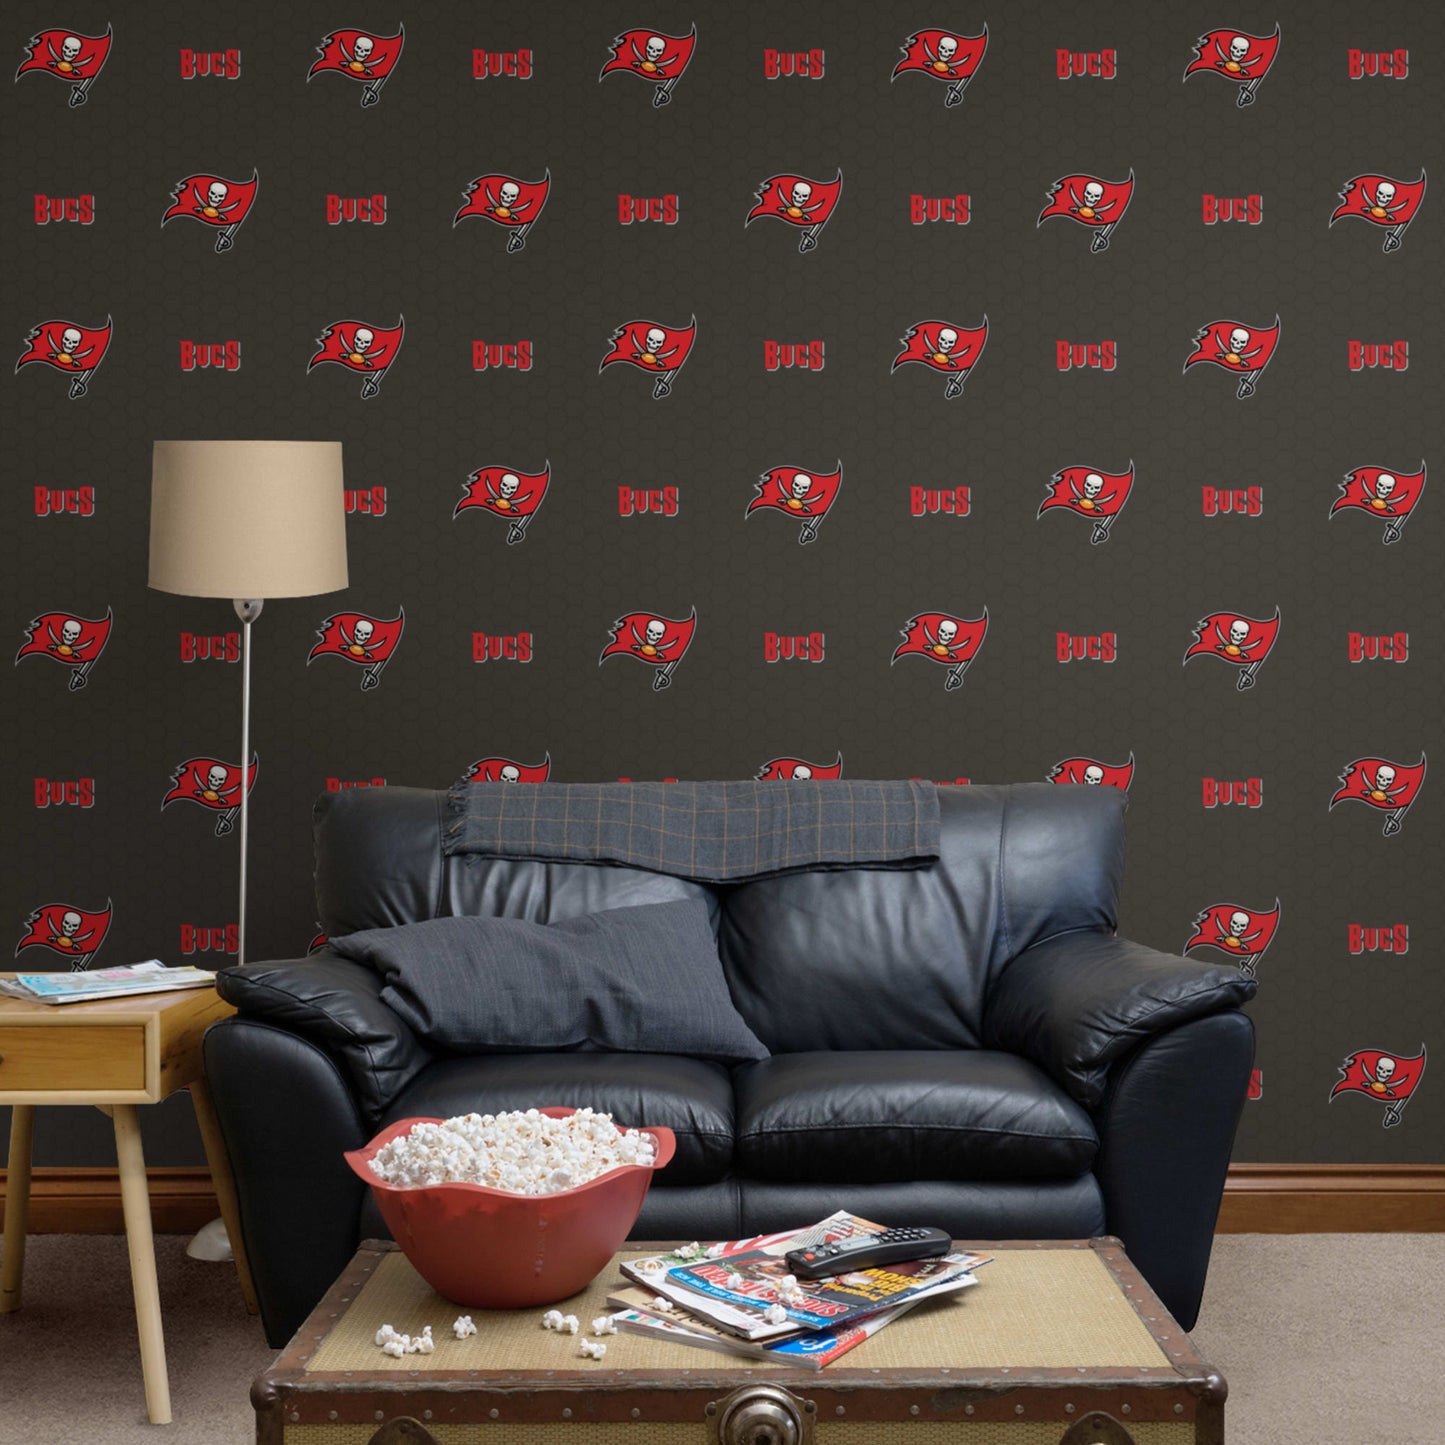 Atlanta Hawks Logo 4' L x 24' W Peel and Stick Wallpaper Roll Fathead Color: Gray, NFL Team: Tampa Bay Buccaneers